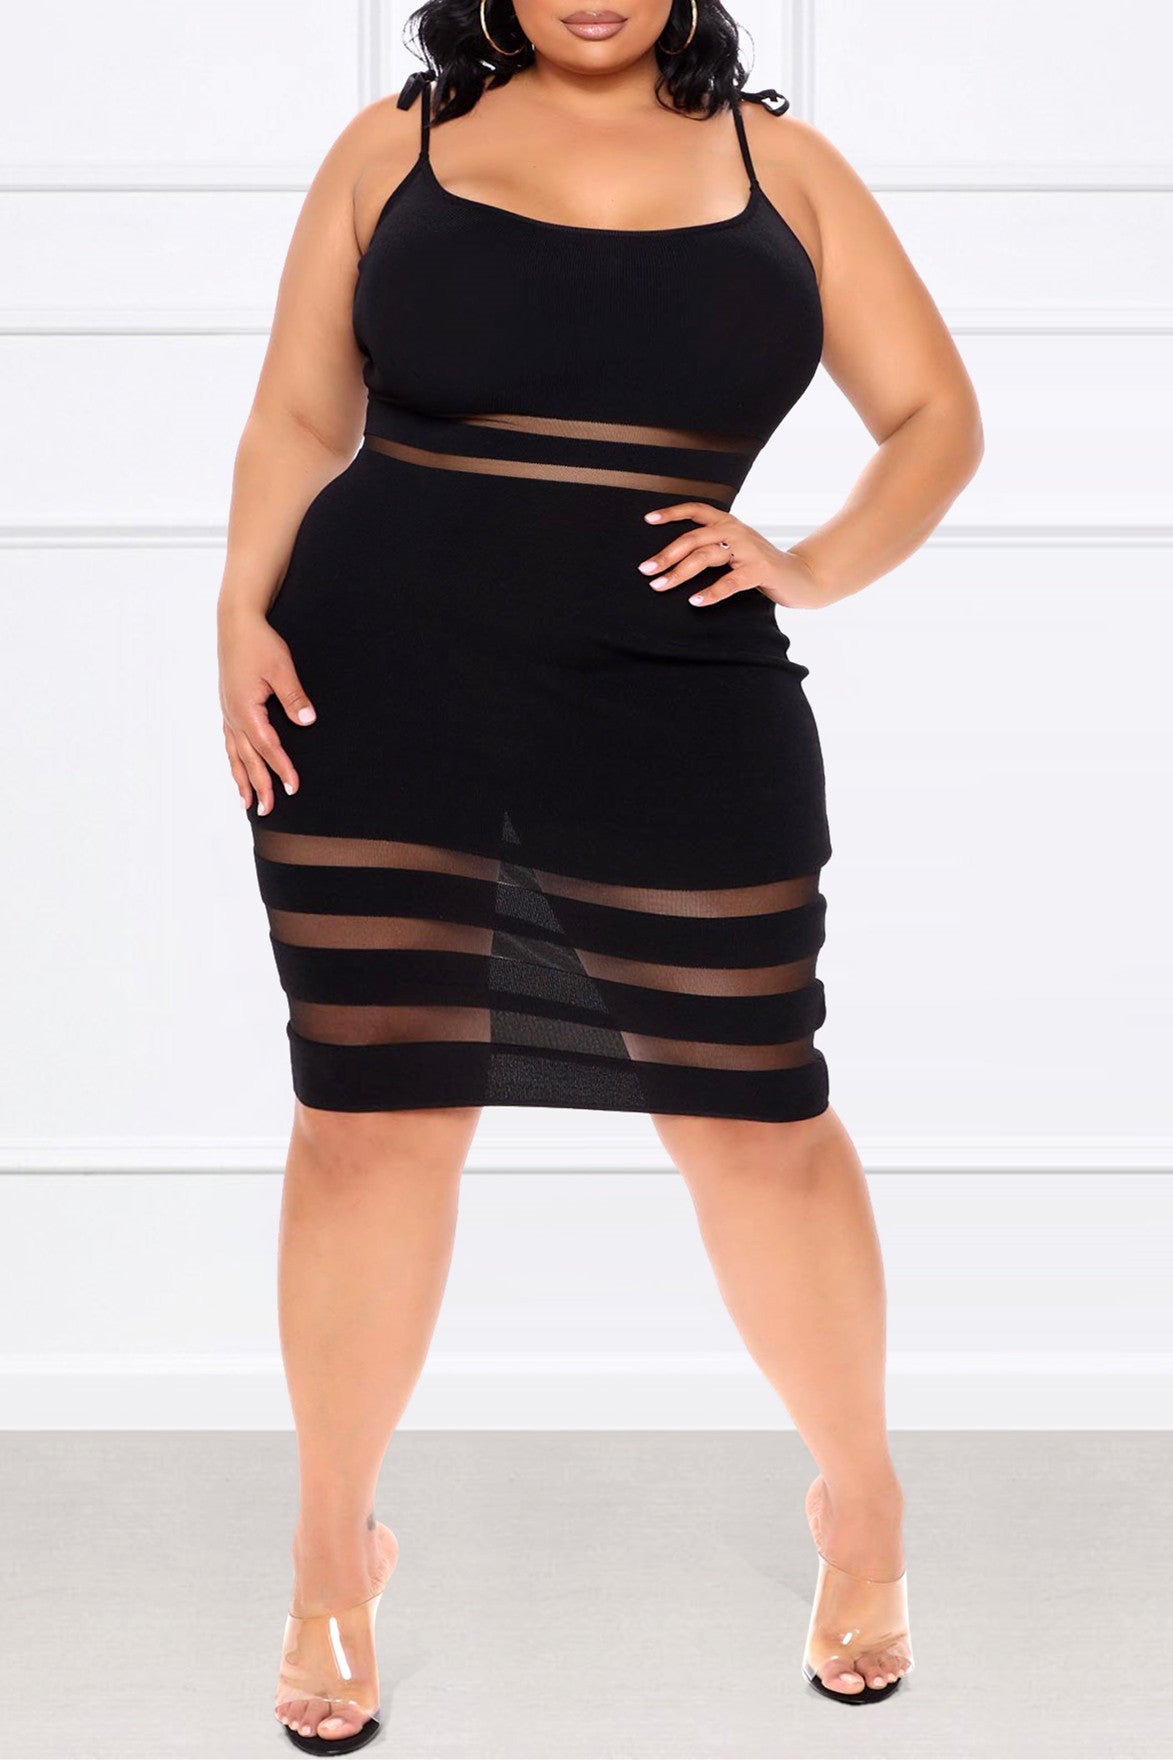 Plus Size Black Sexy Dress Sleeveless Dresses